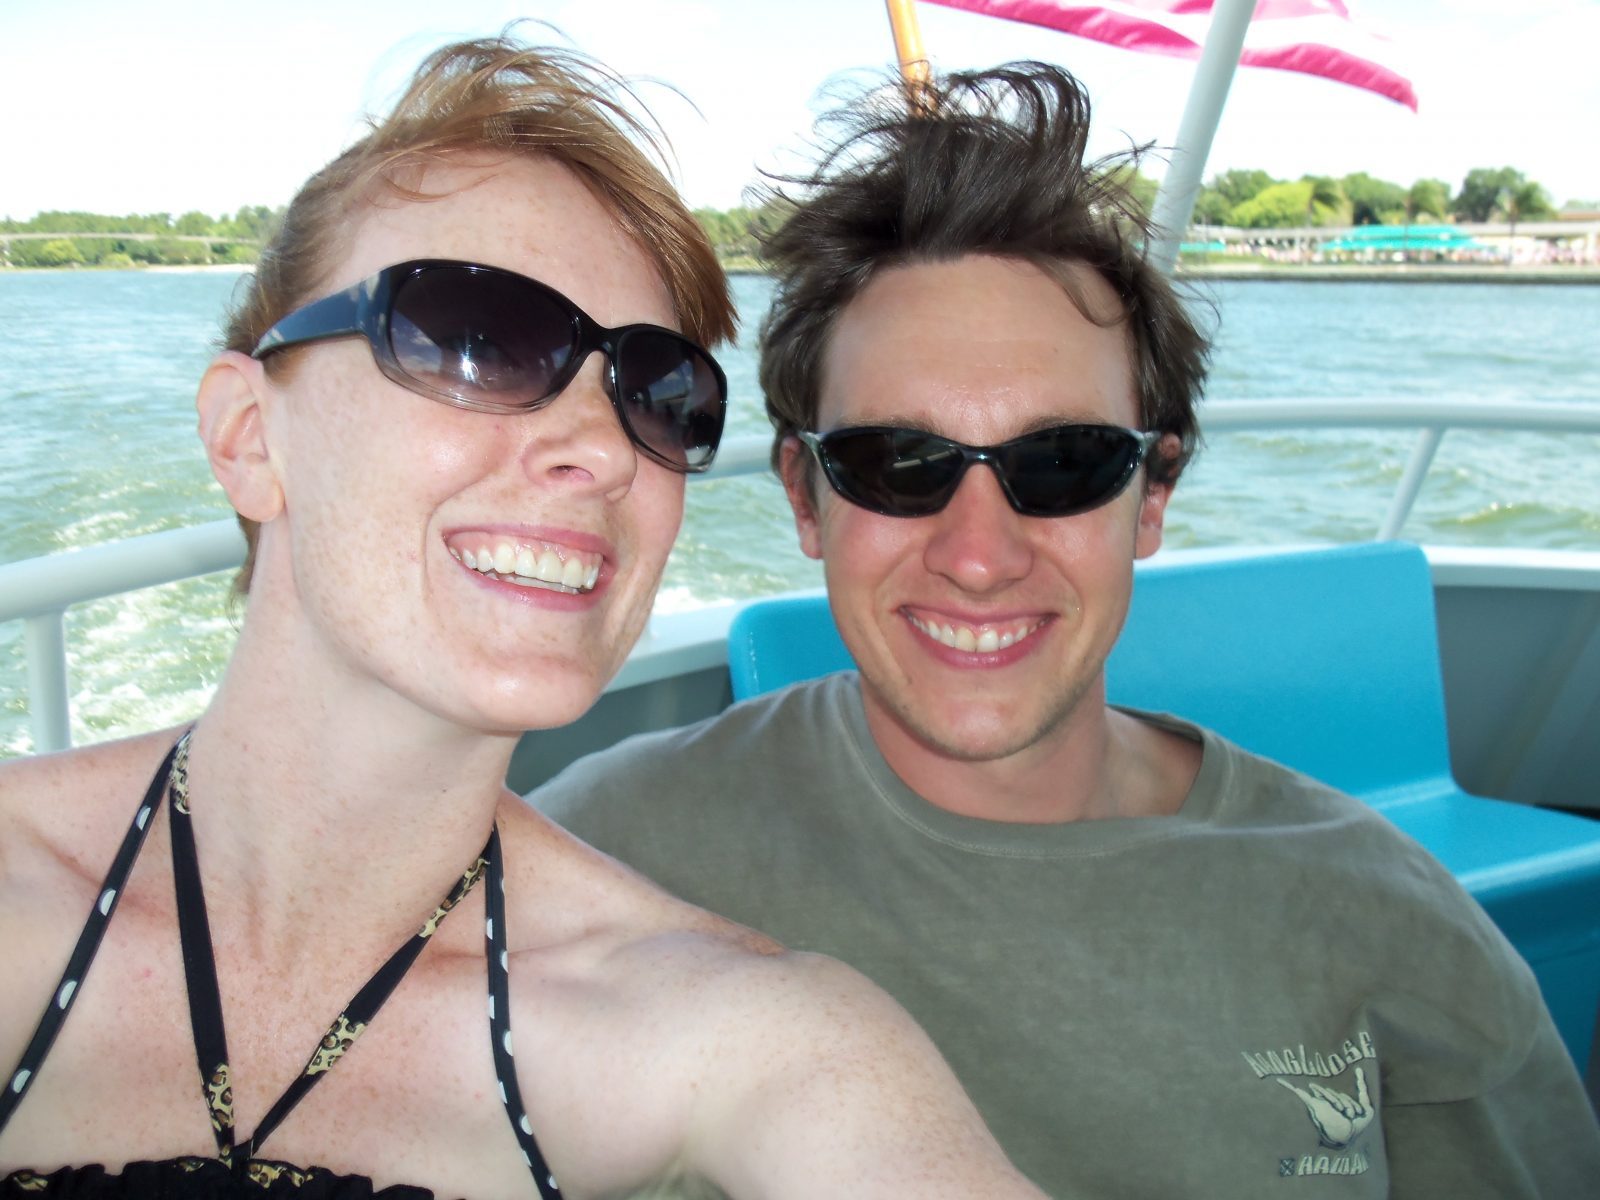 couple enjoying a boat ride at disney